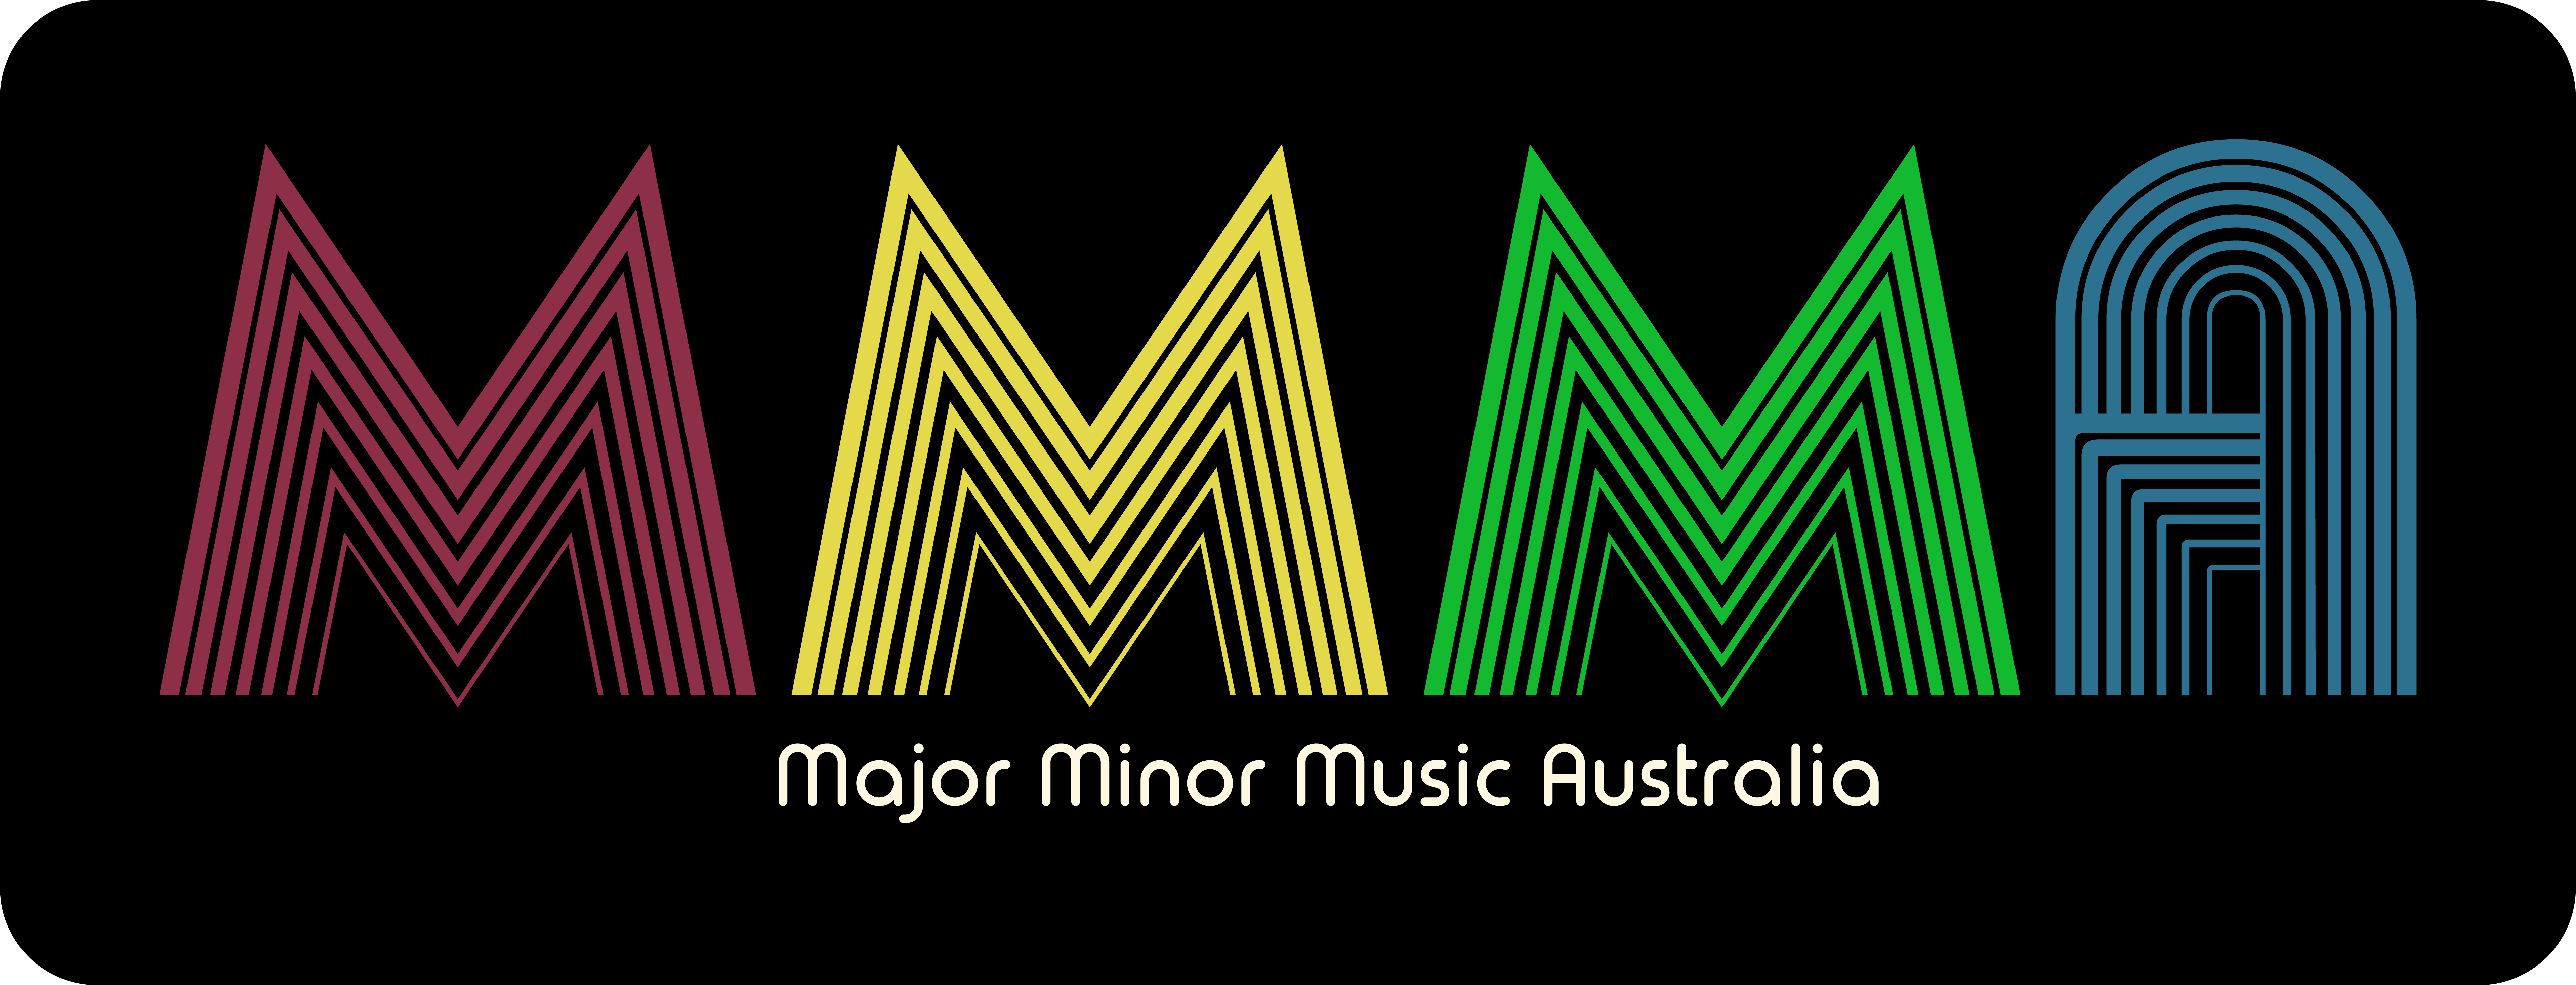 Major Minor Music Australia